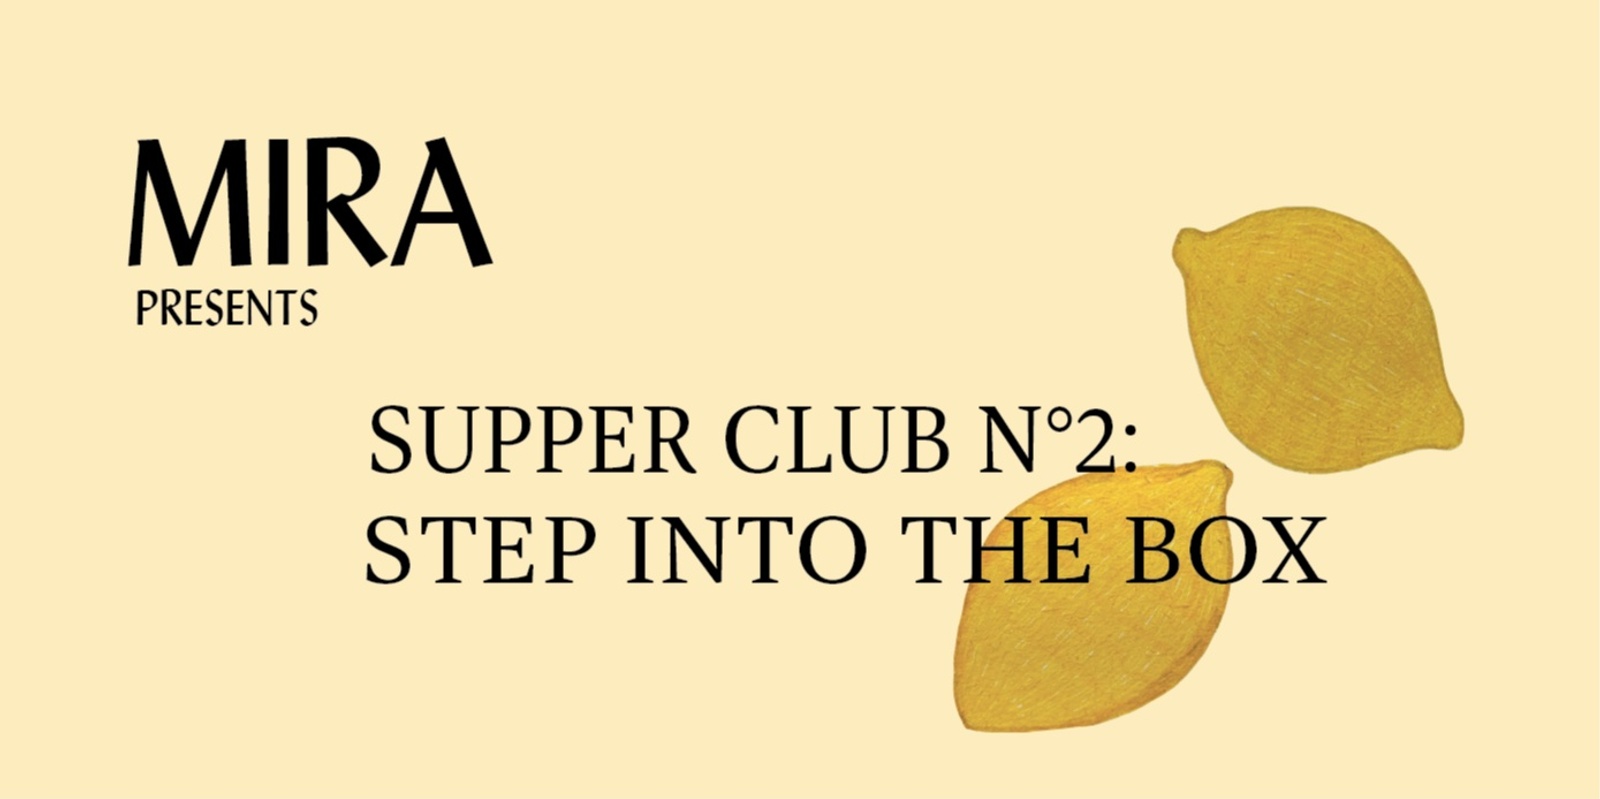 MIRA SUPPER CLUB N°2